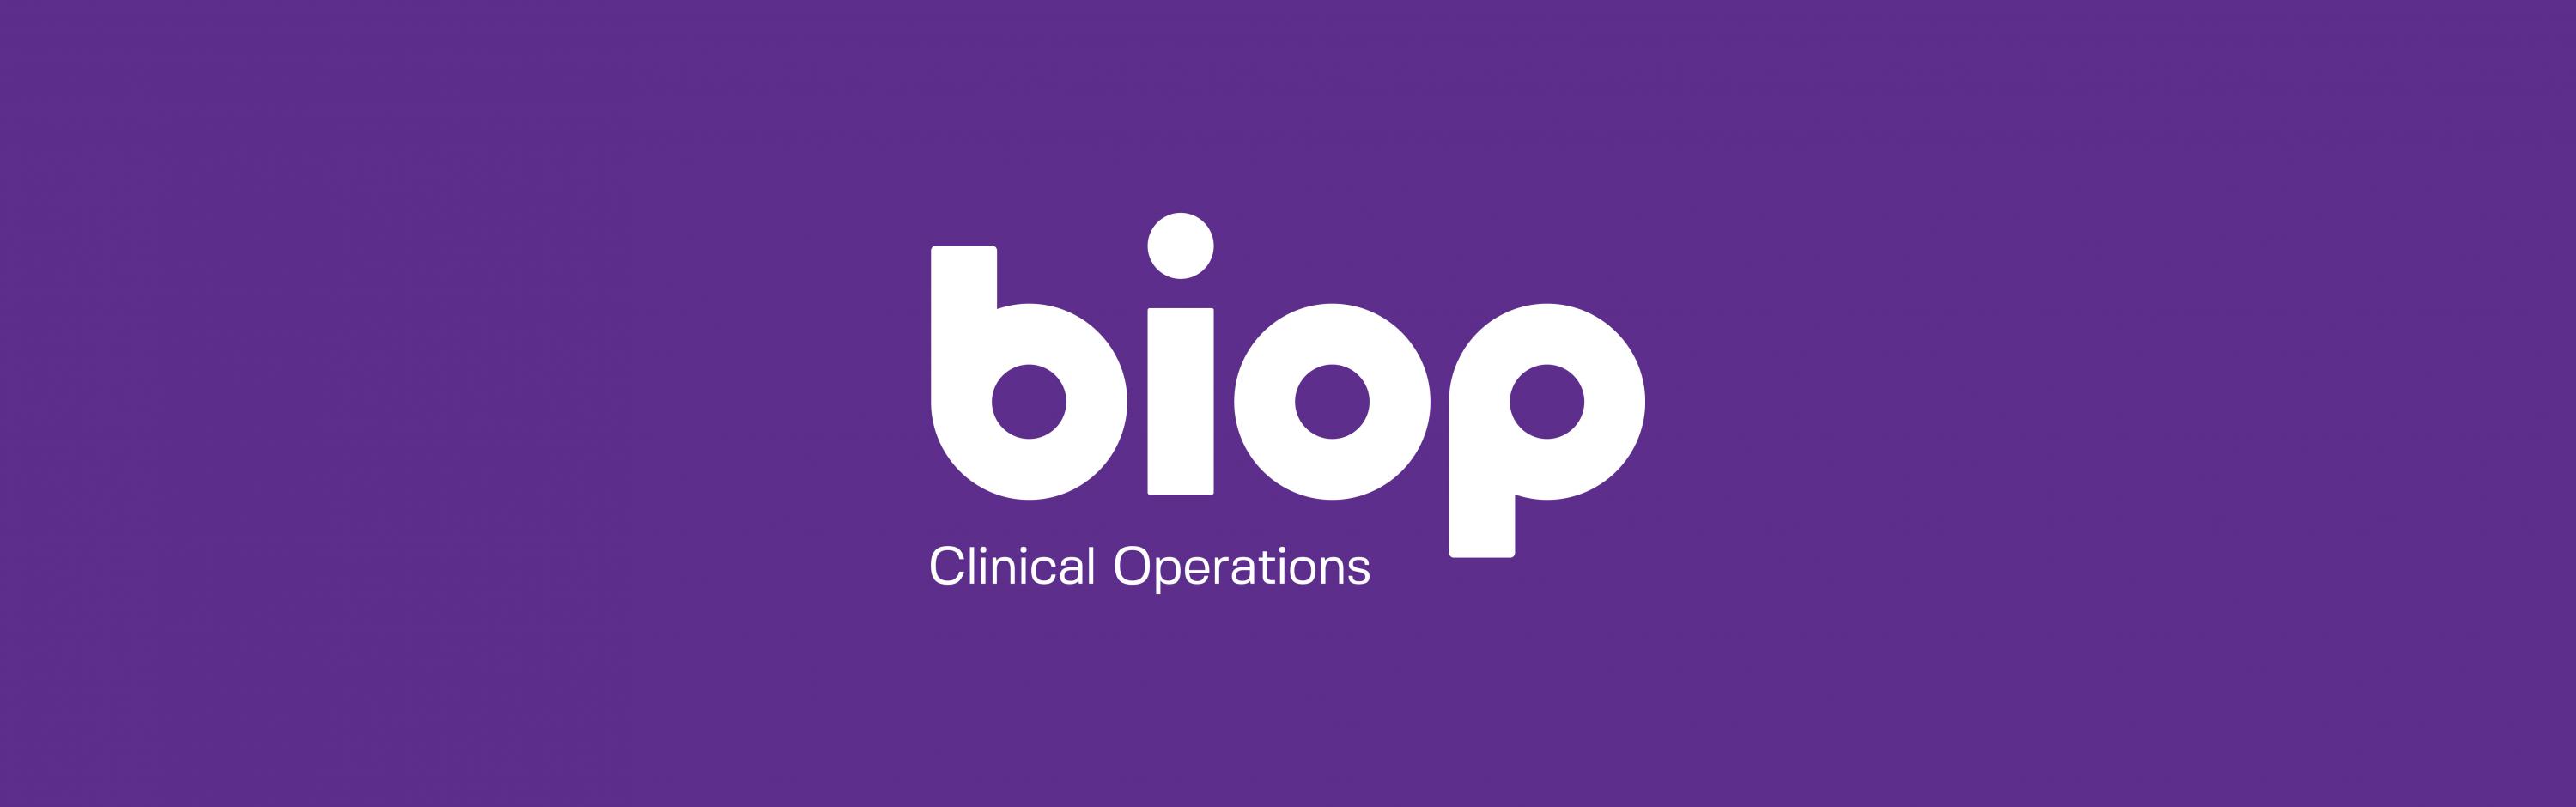 Biop logo